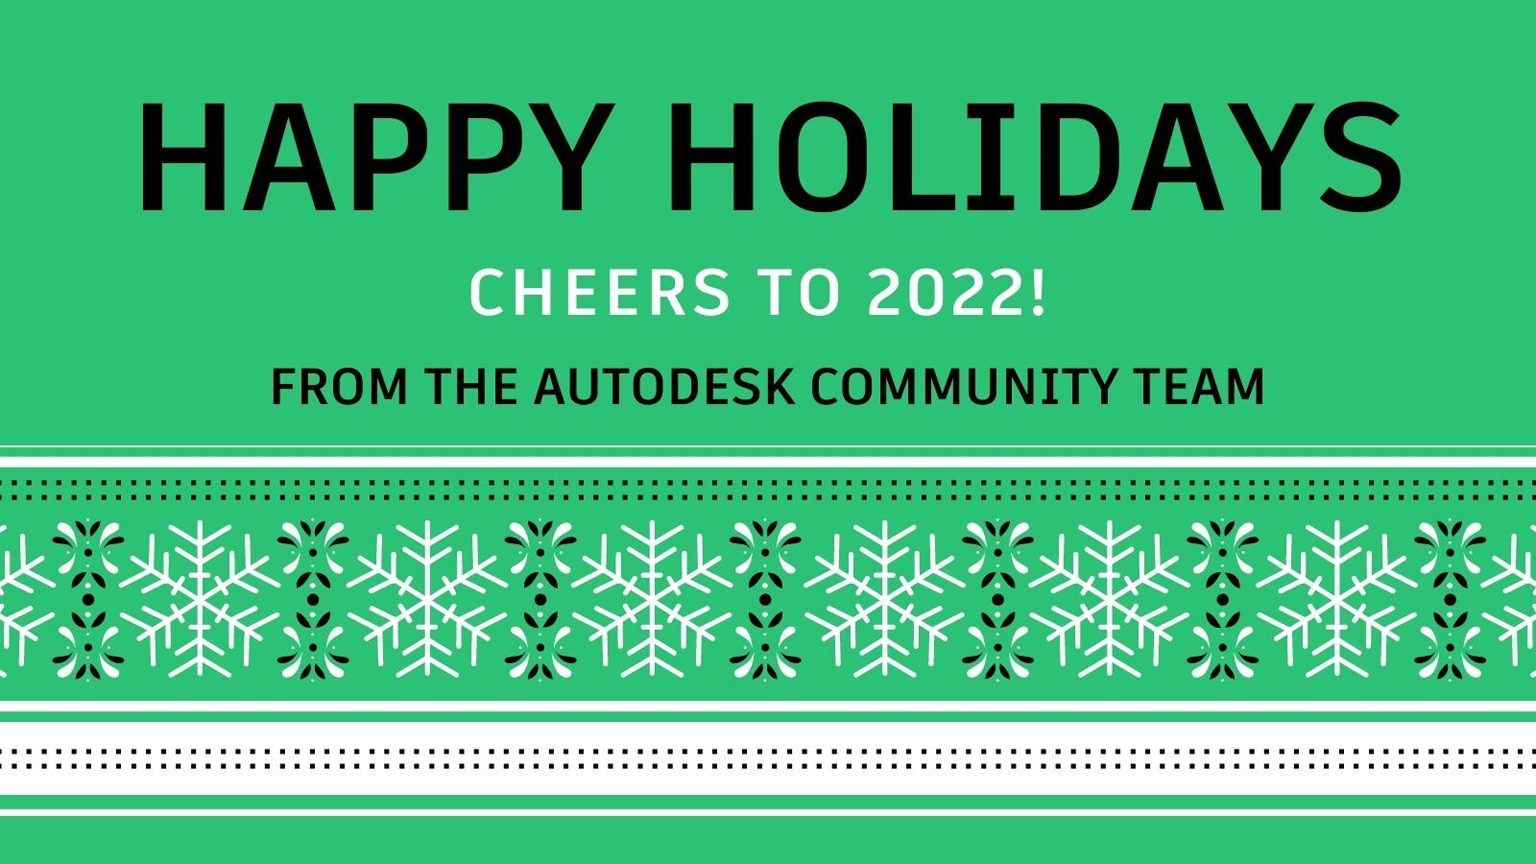 Autodesk Community